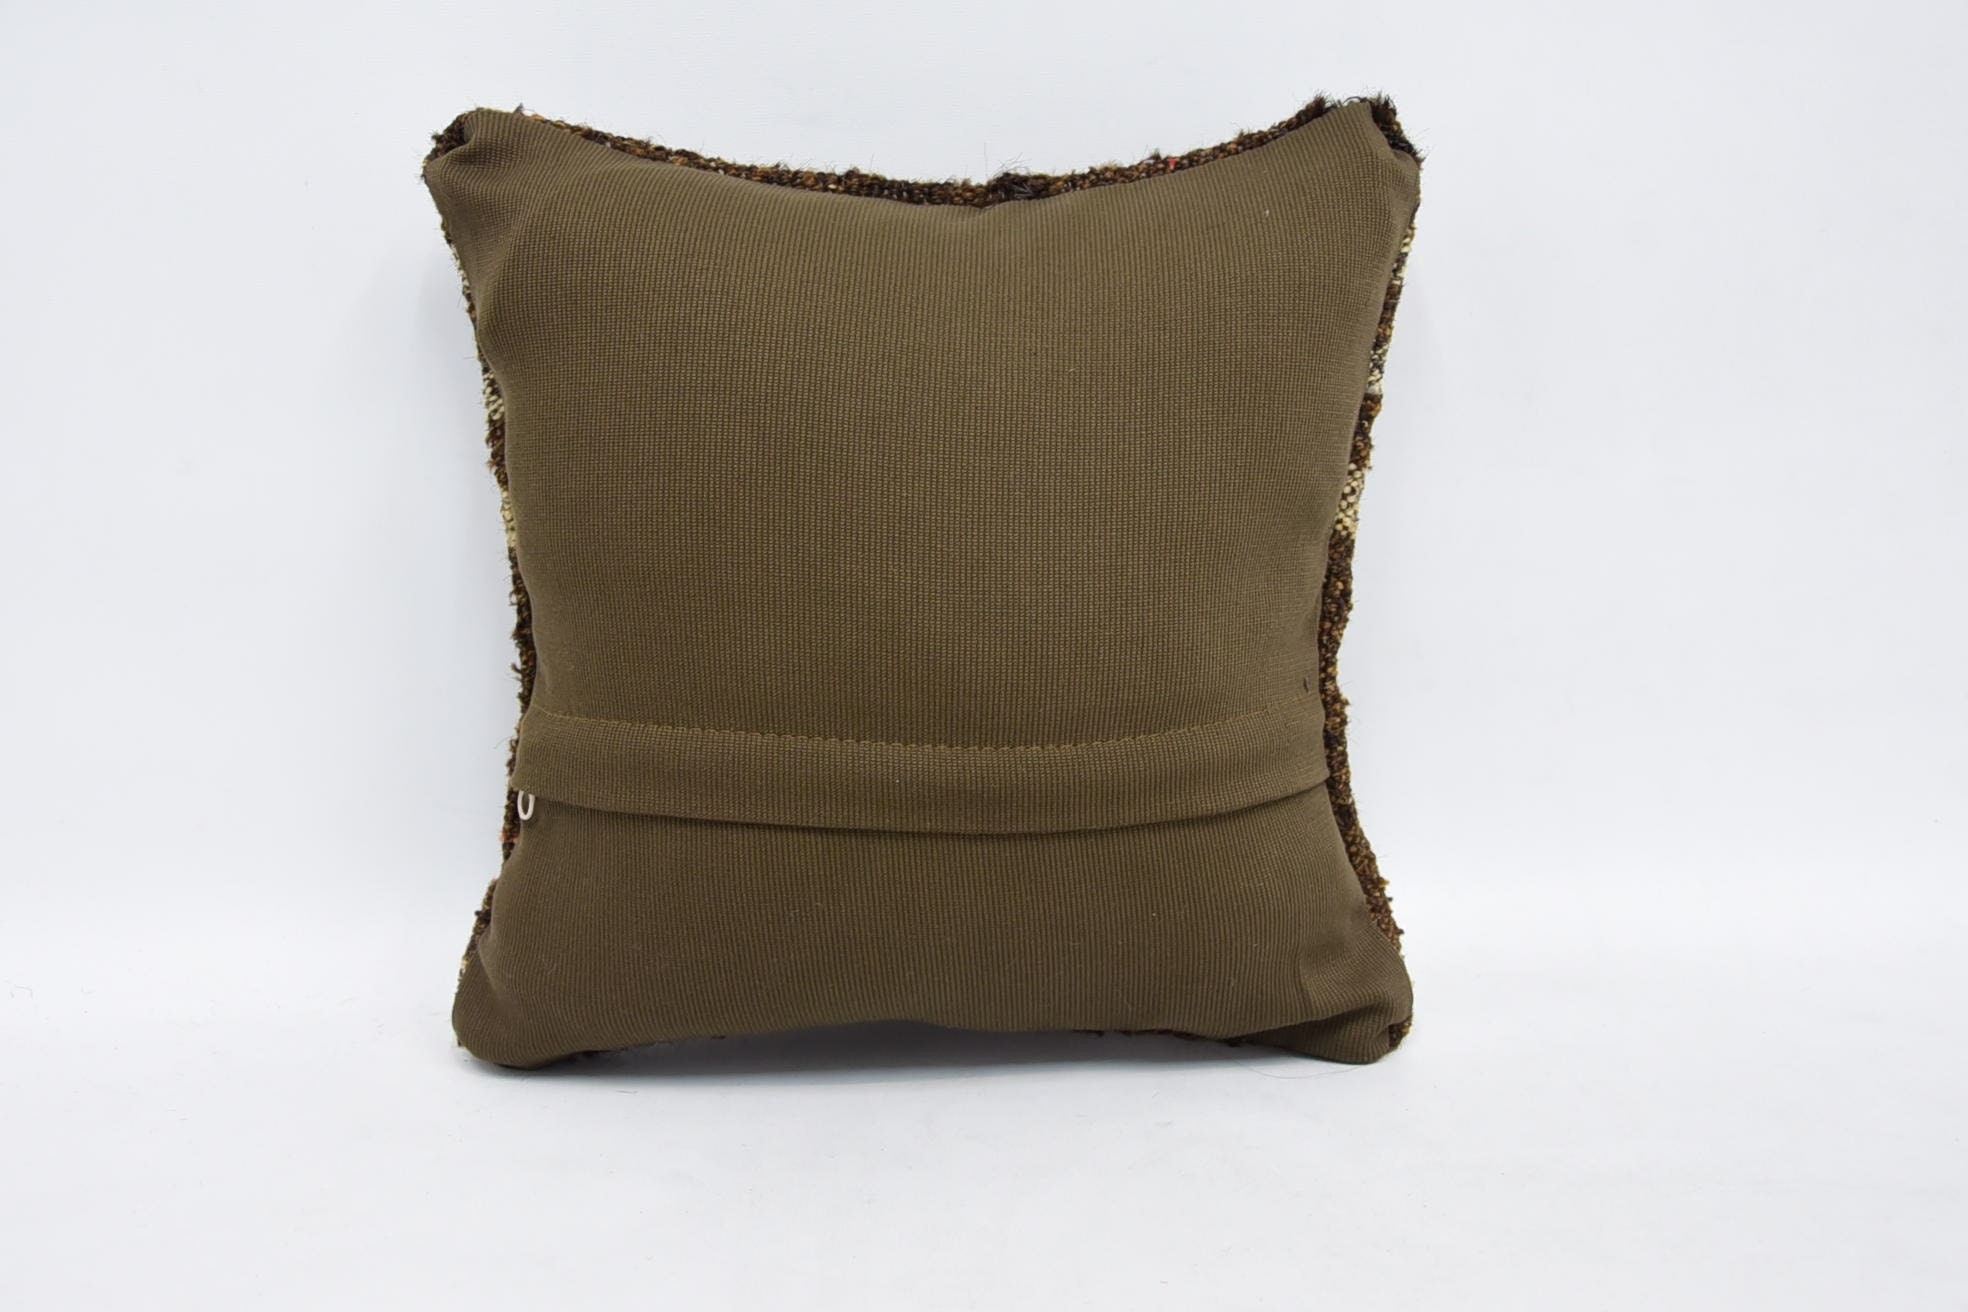 Car Cushion, Kilim Cushion Sham, Kilim Pillow, Handmade Throw Cushion Case, 12"x12" Brown Cushion, Ethnical Kilim Rug Pillow